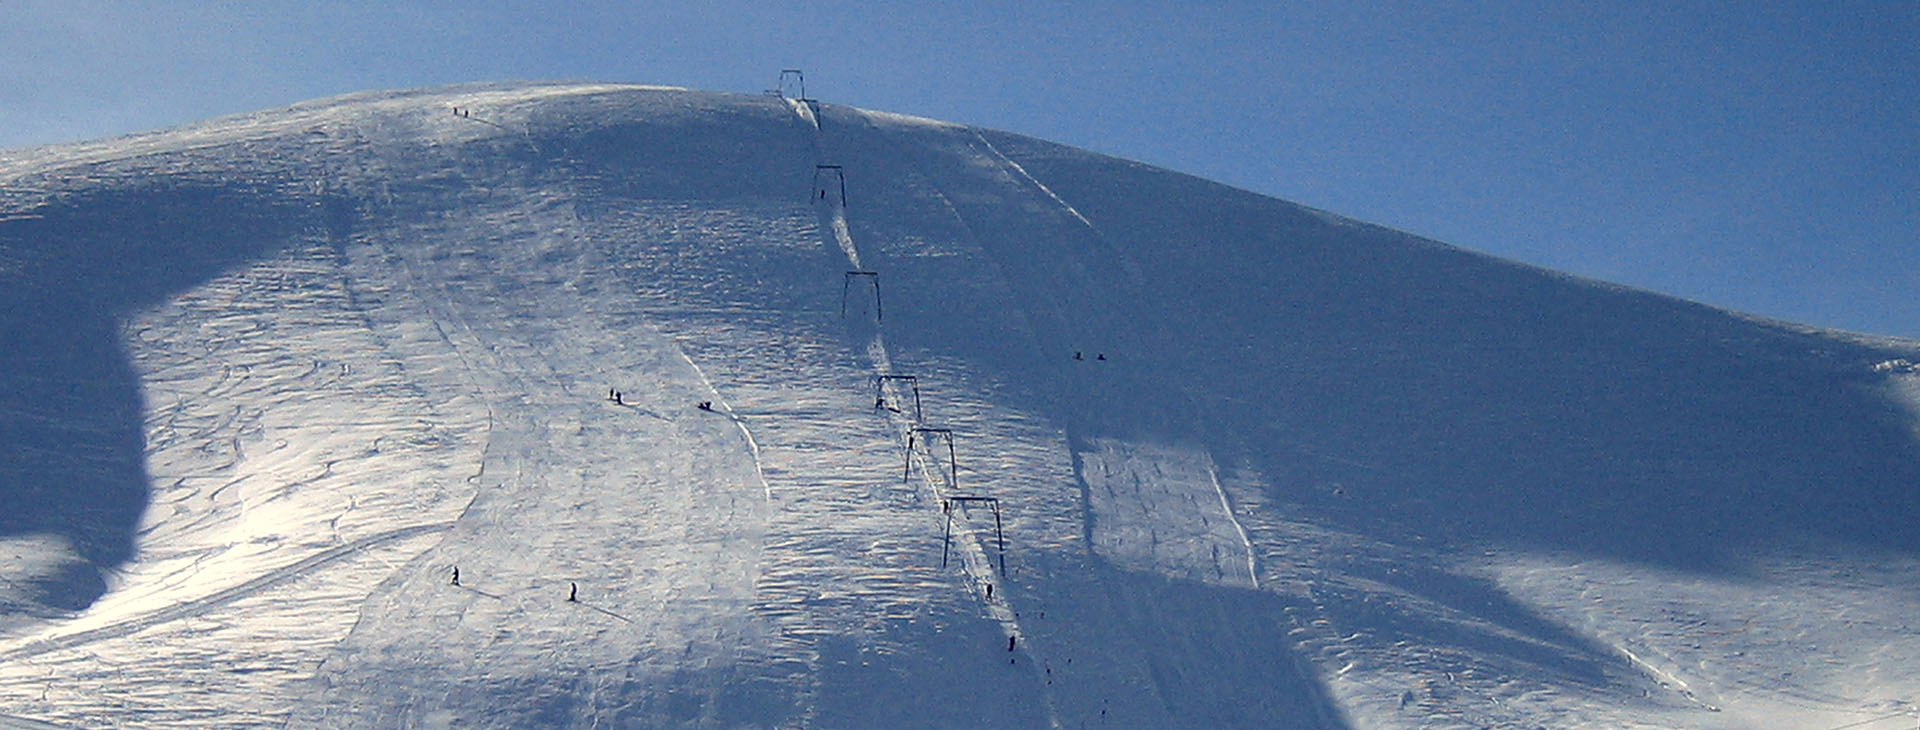 Falakro Ski Center, Mt. Falakro, Drama